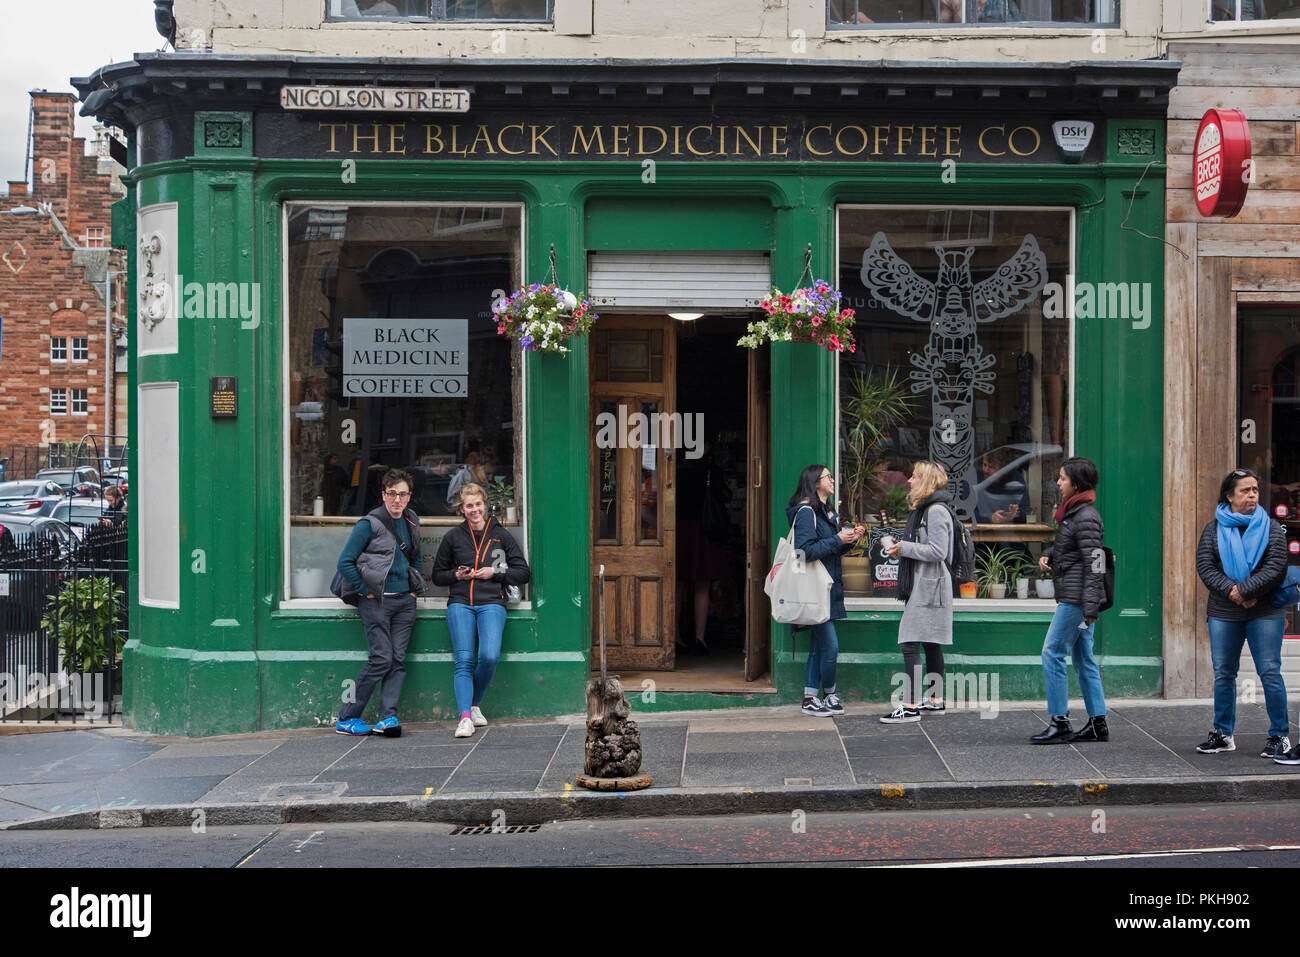 The Black Medicine Coffee Company, Nicolson Street, Edinburgh, Scotland, UK. Stock Photo